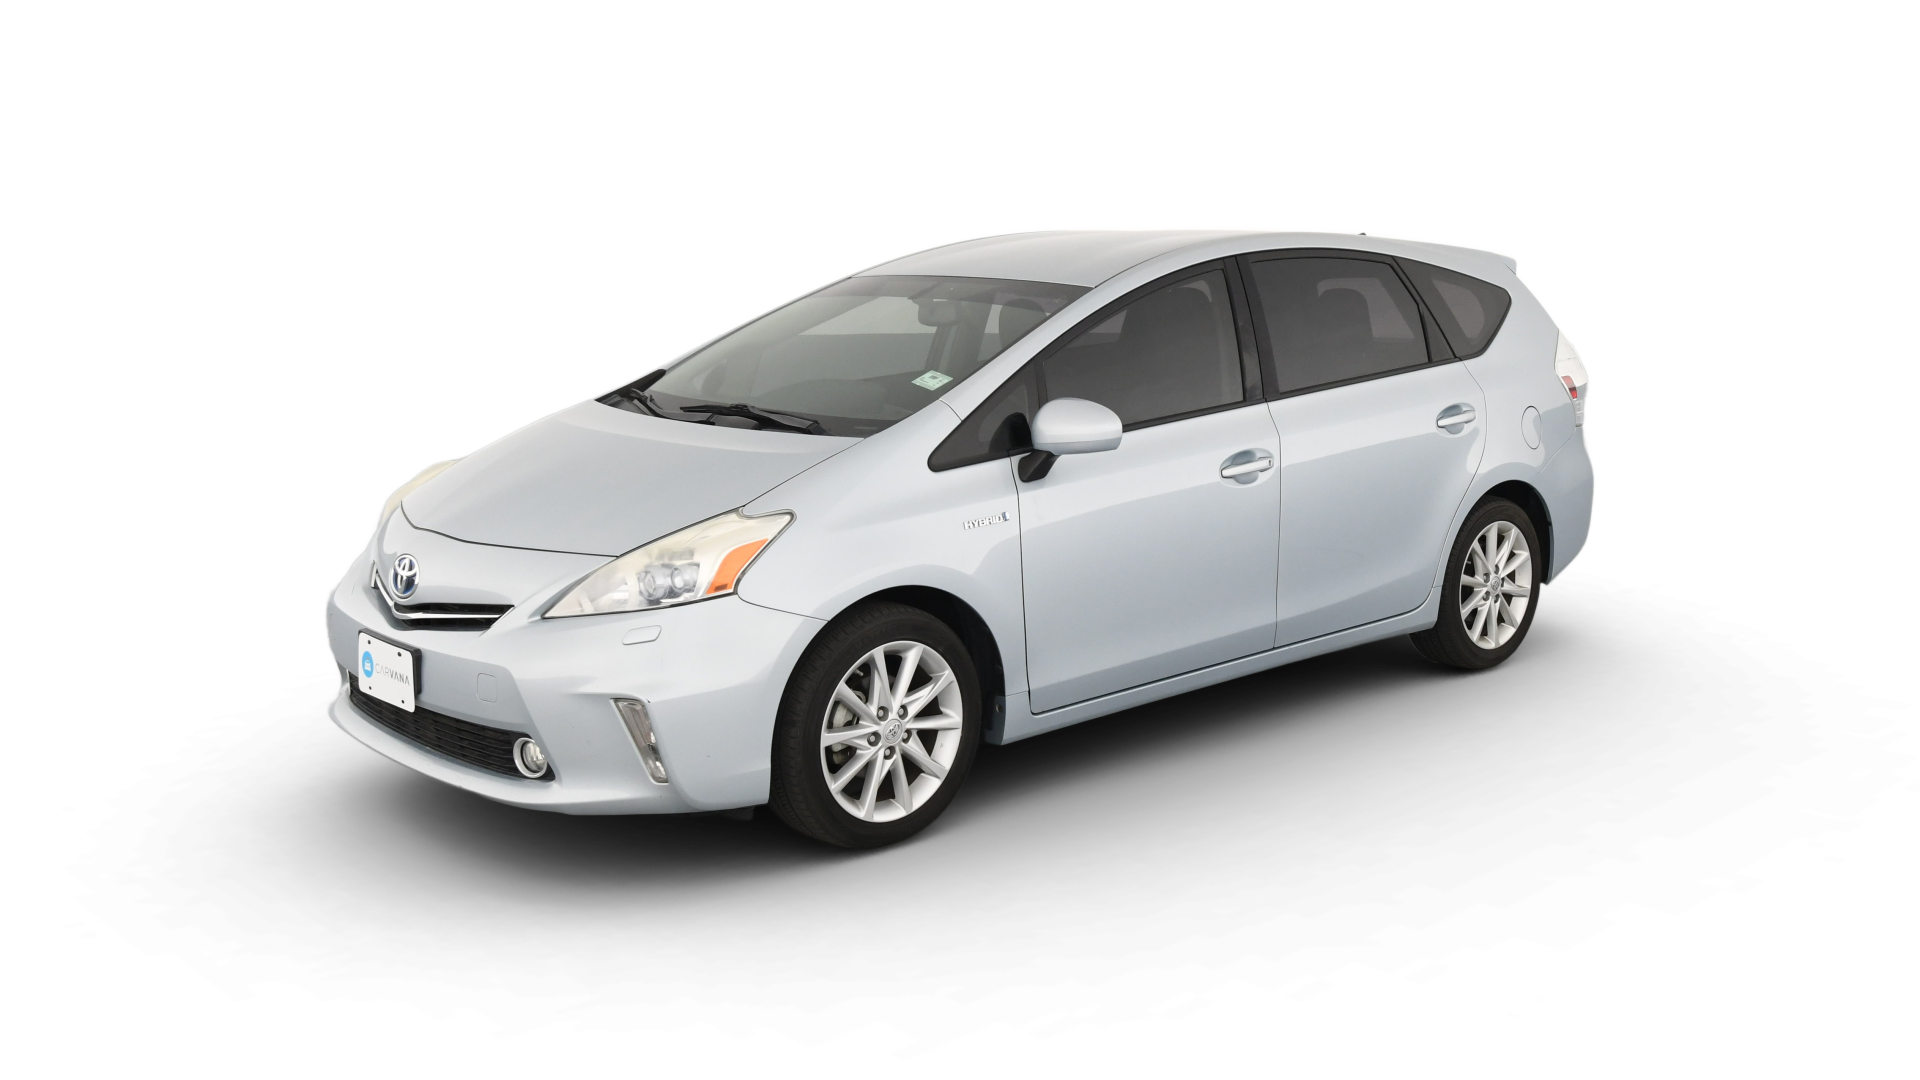 Used Toyota Prius v For Sale Online | Carvana